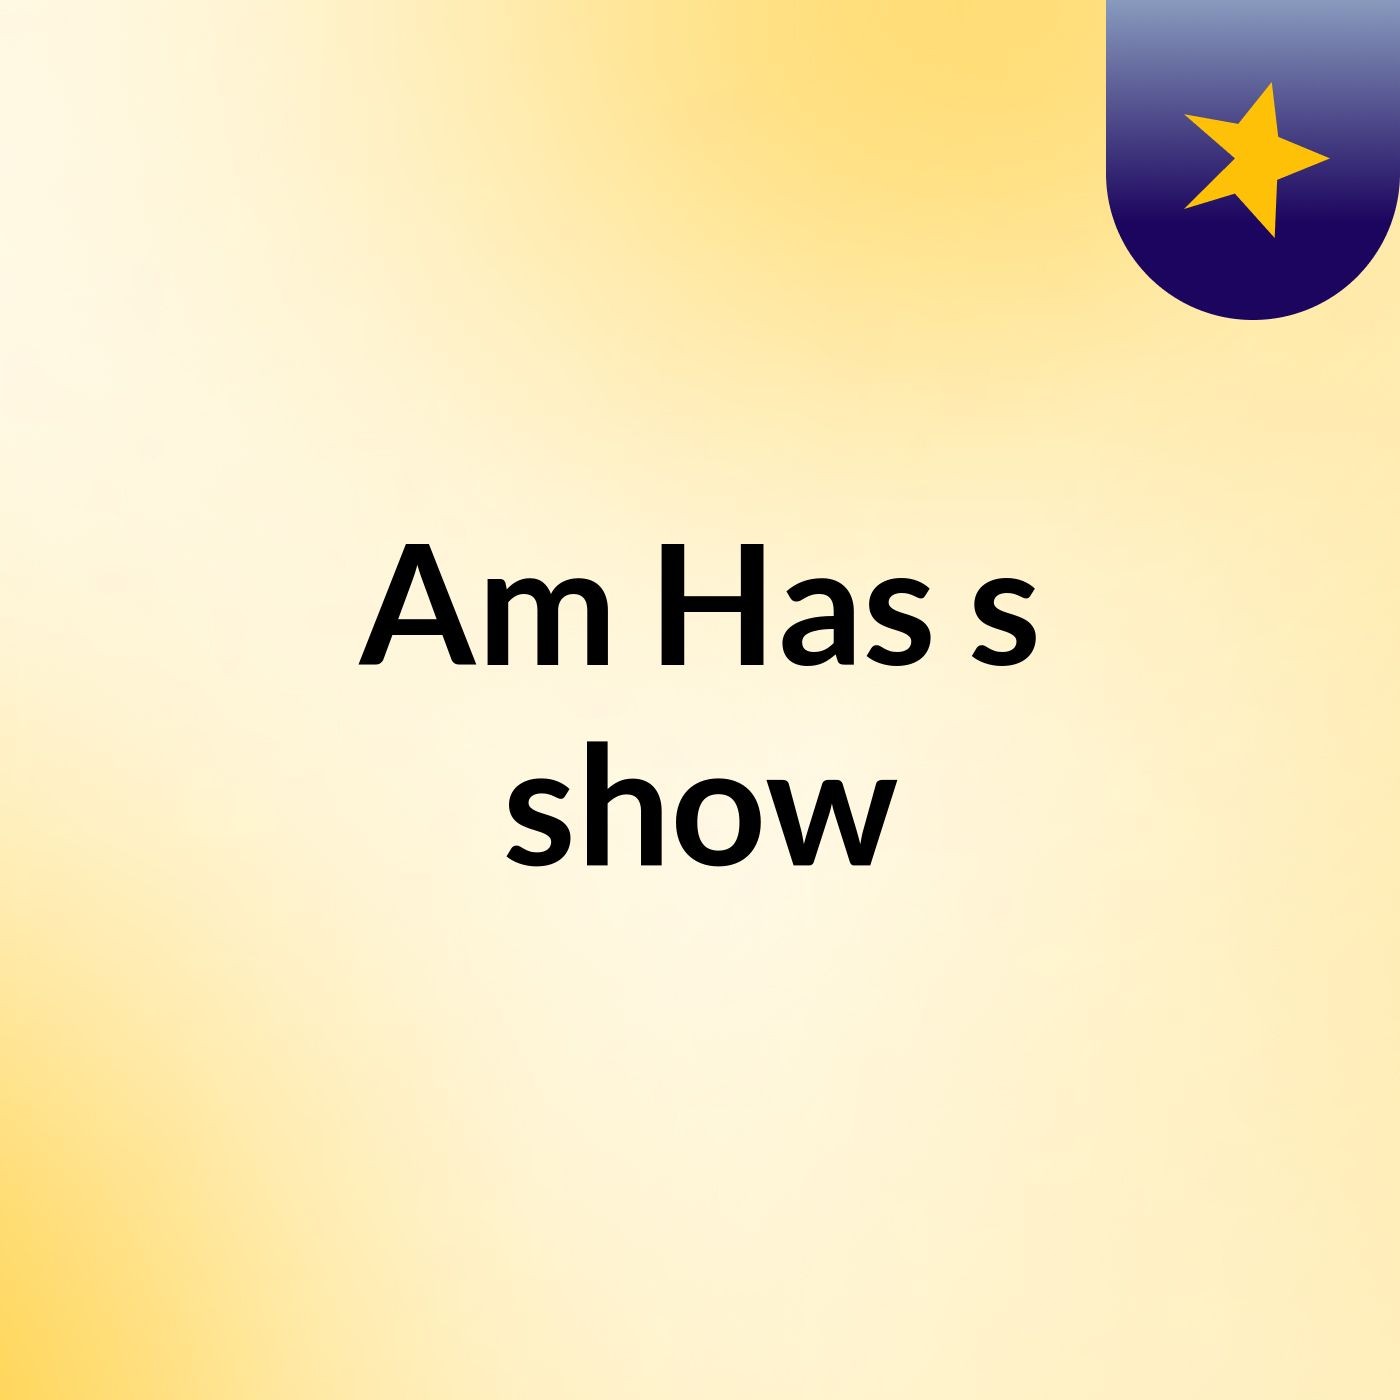 Am Has's show